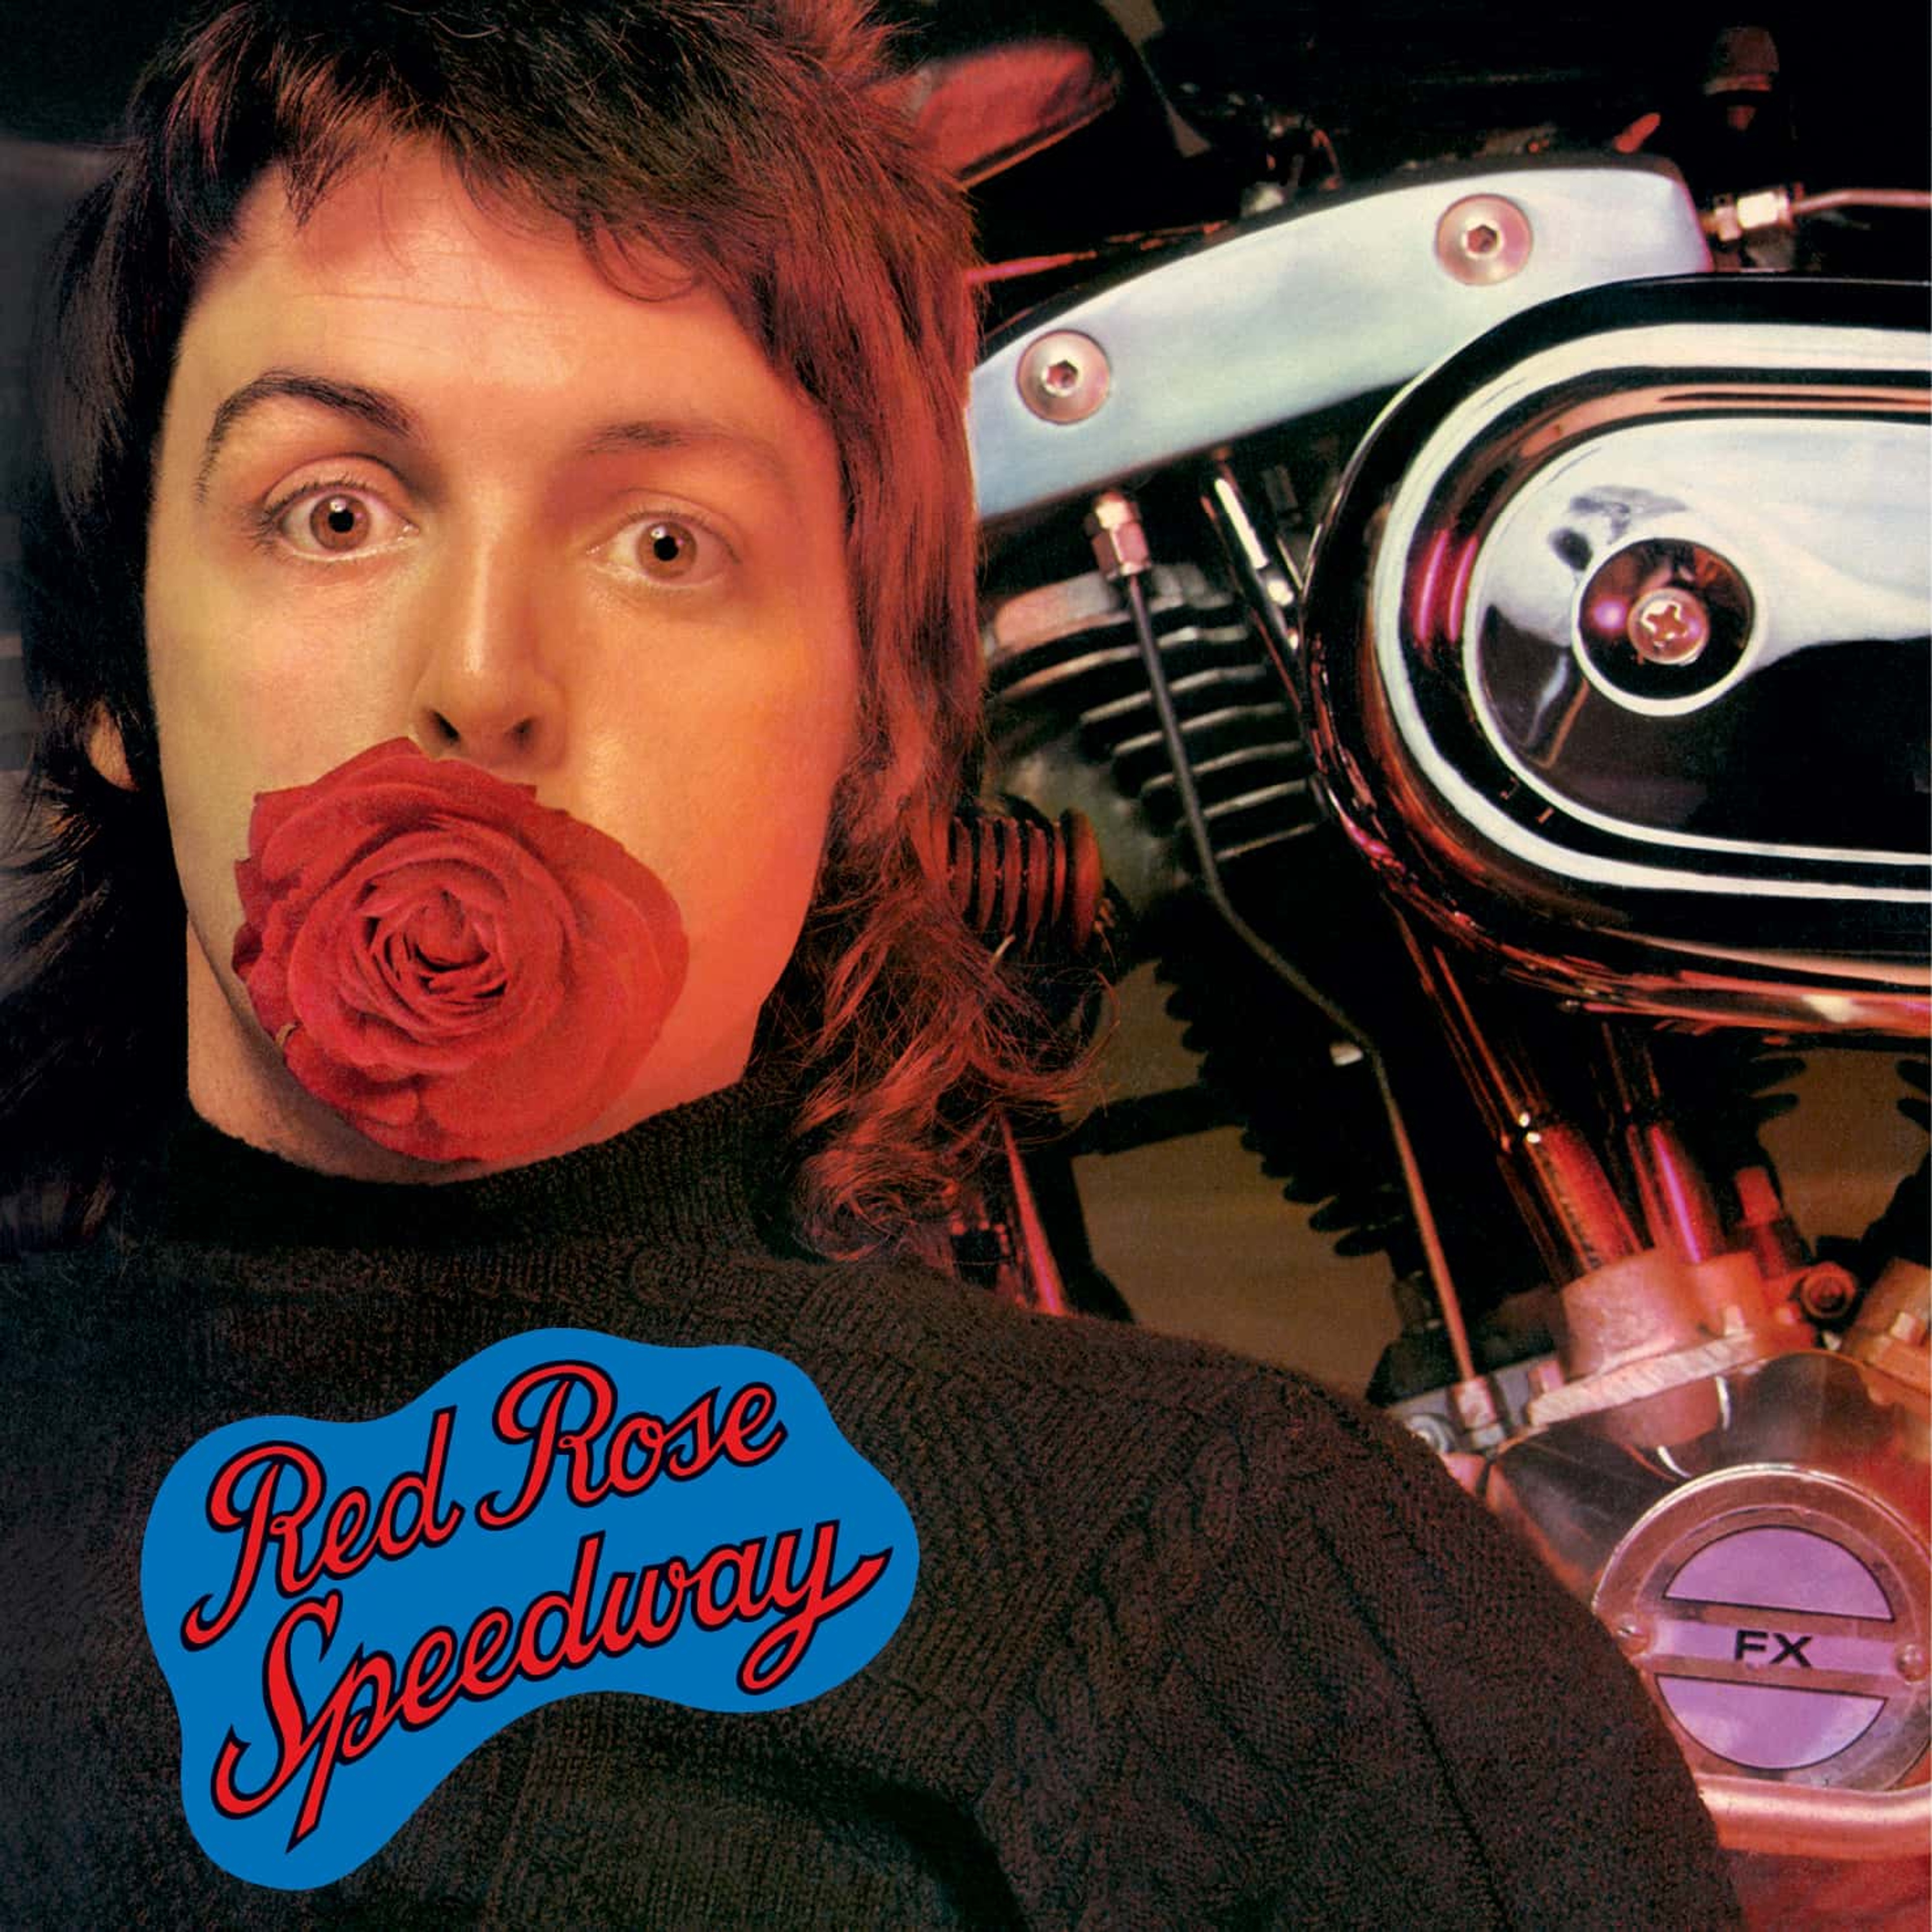 Red Rose Speedway Album Sleeve